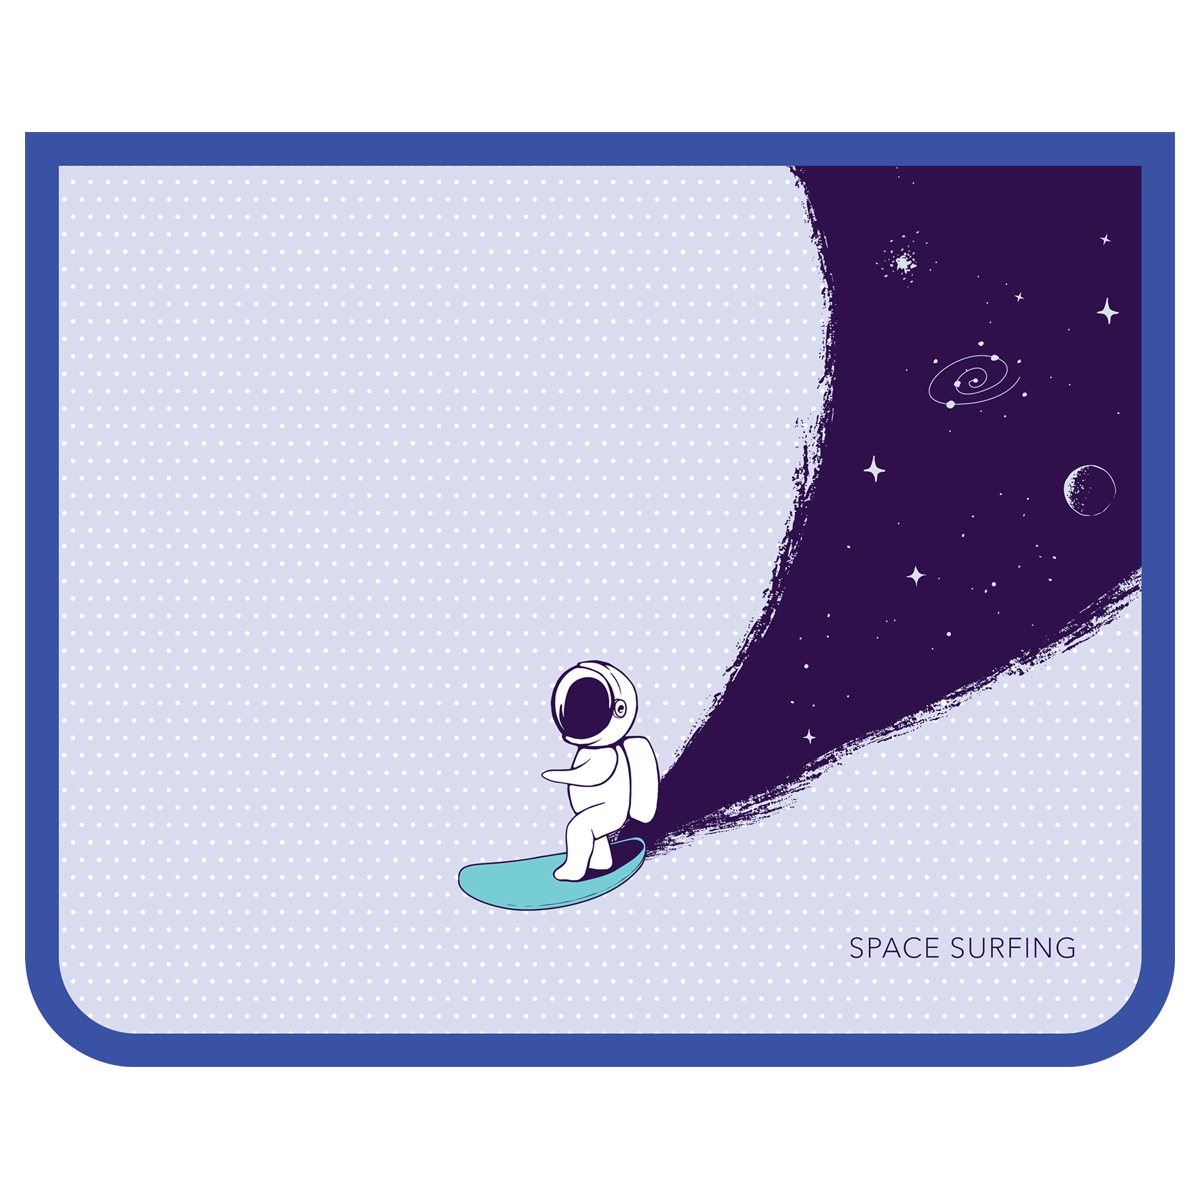    1 , 5, ArtSpace "Space Surfing", 240*190*40, ,   